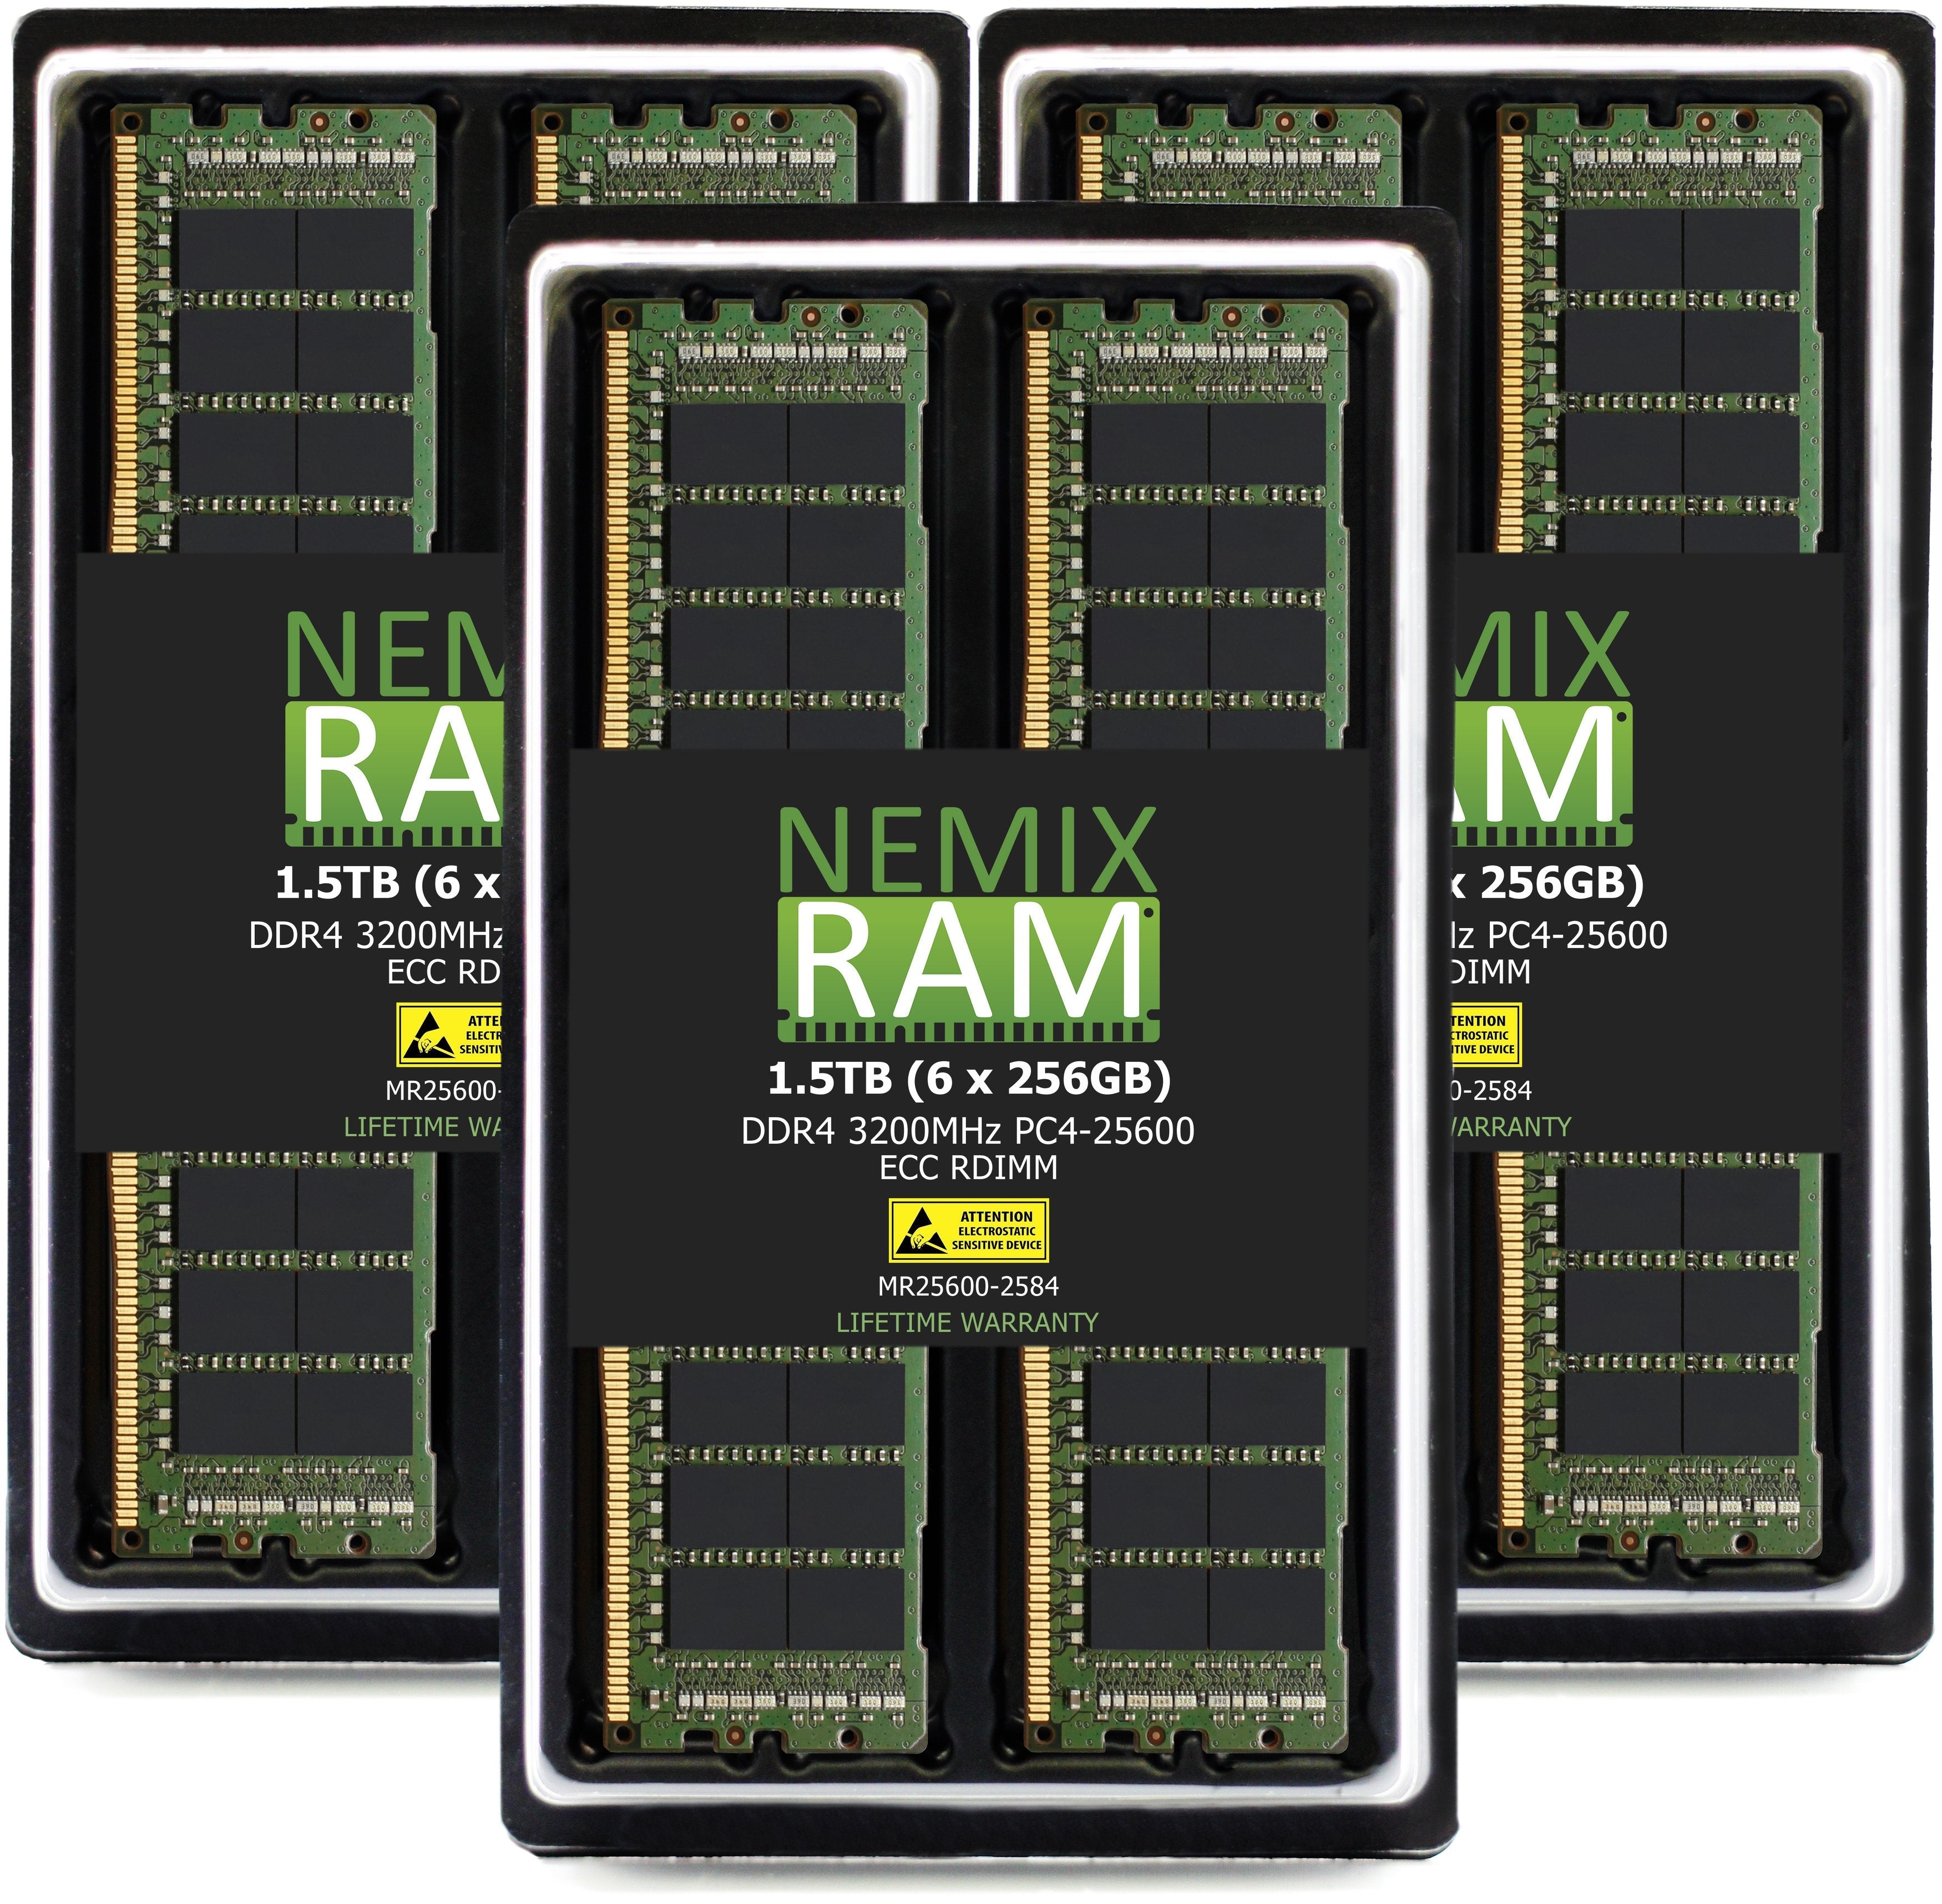 DDR4 3200MHZ PC4-25600 RDIMM 8RX4